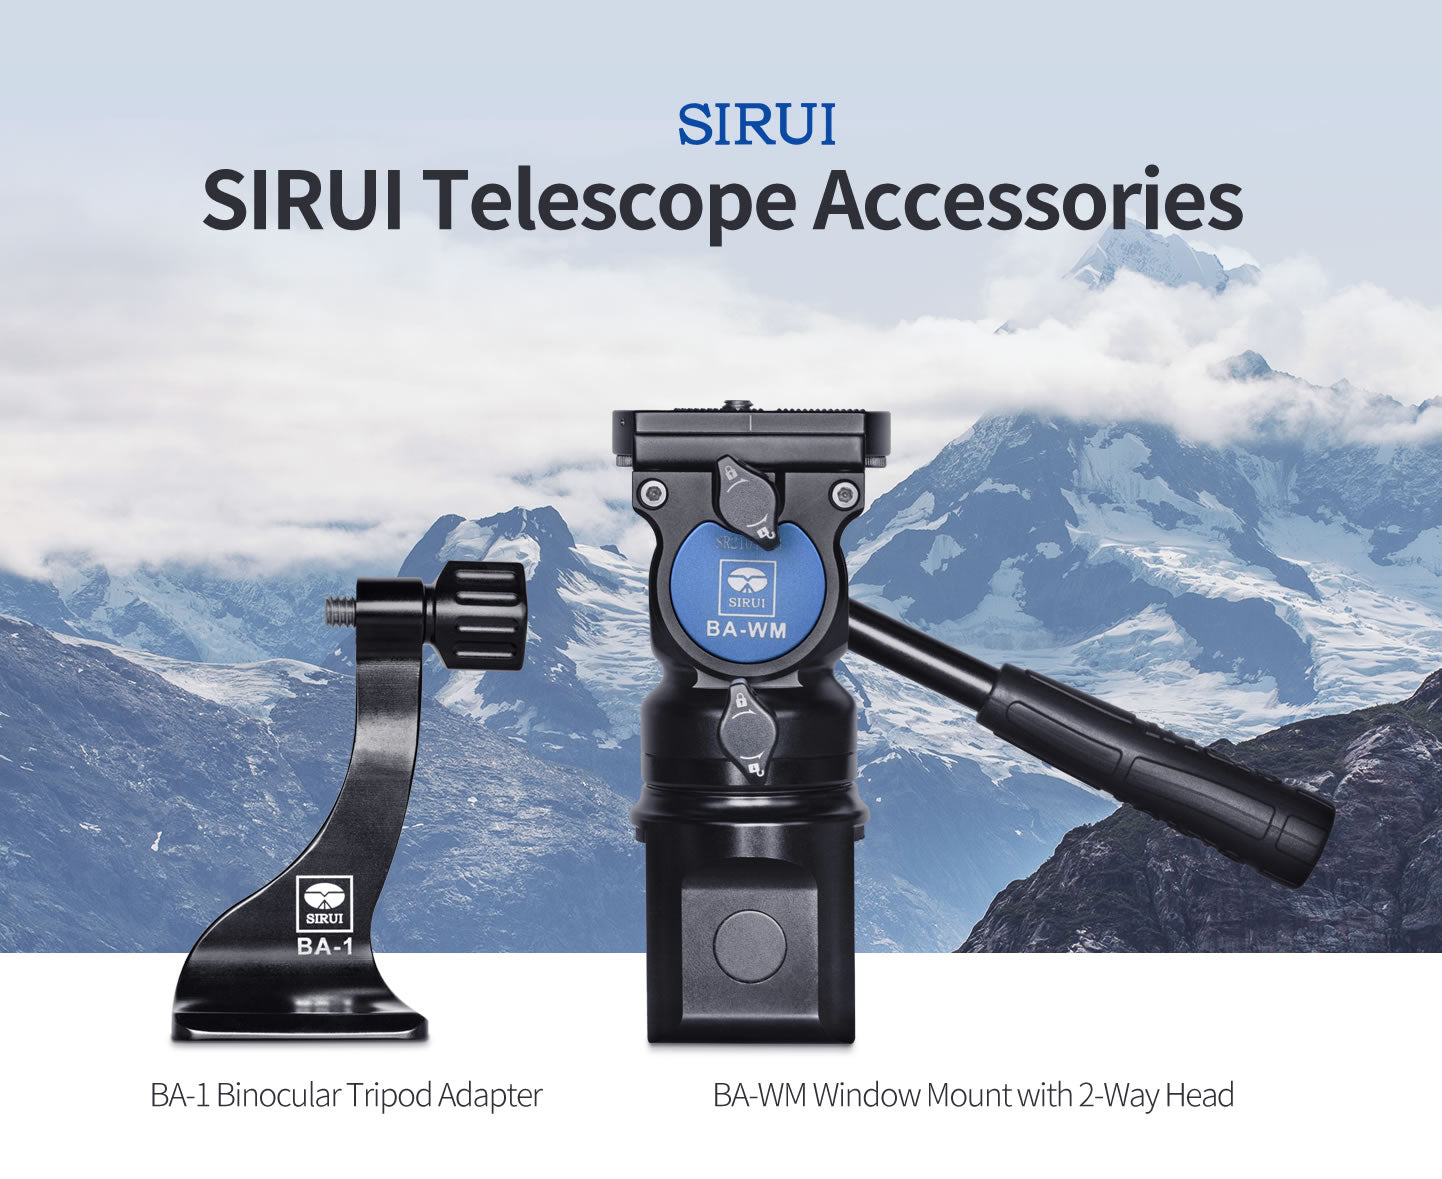 SIRUI Telescope Accessories